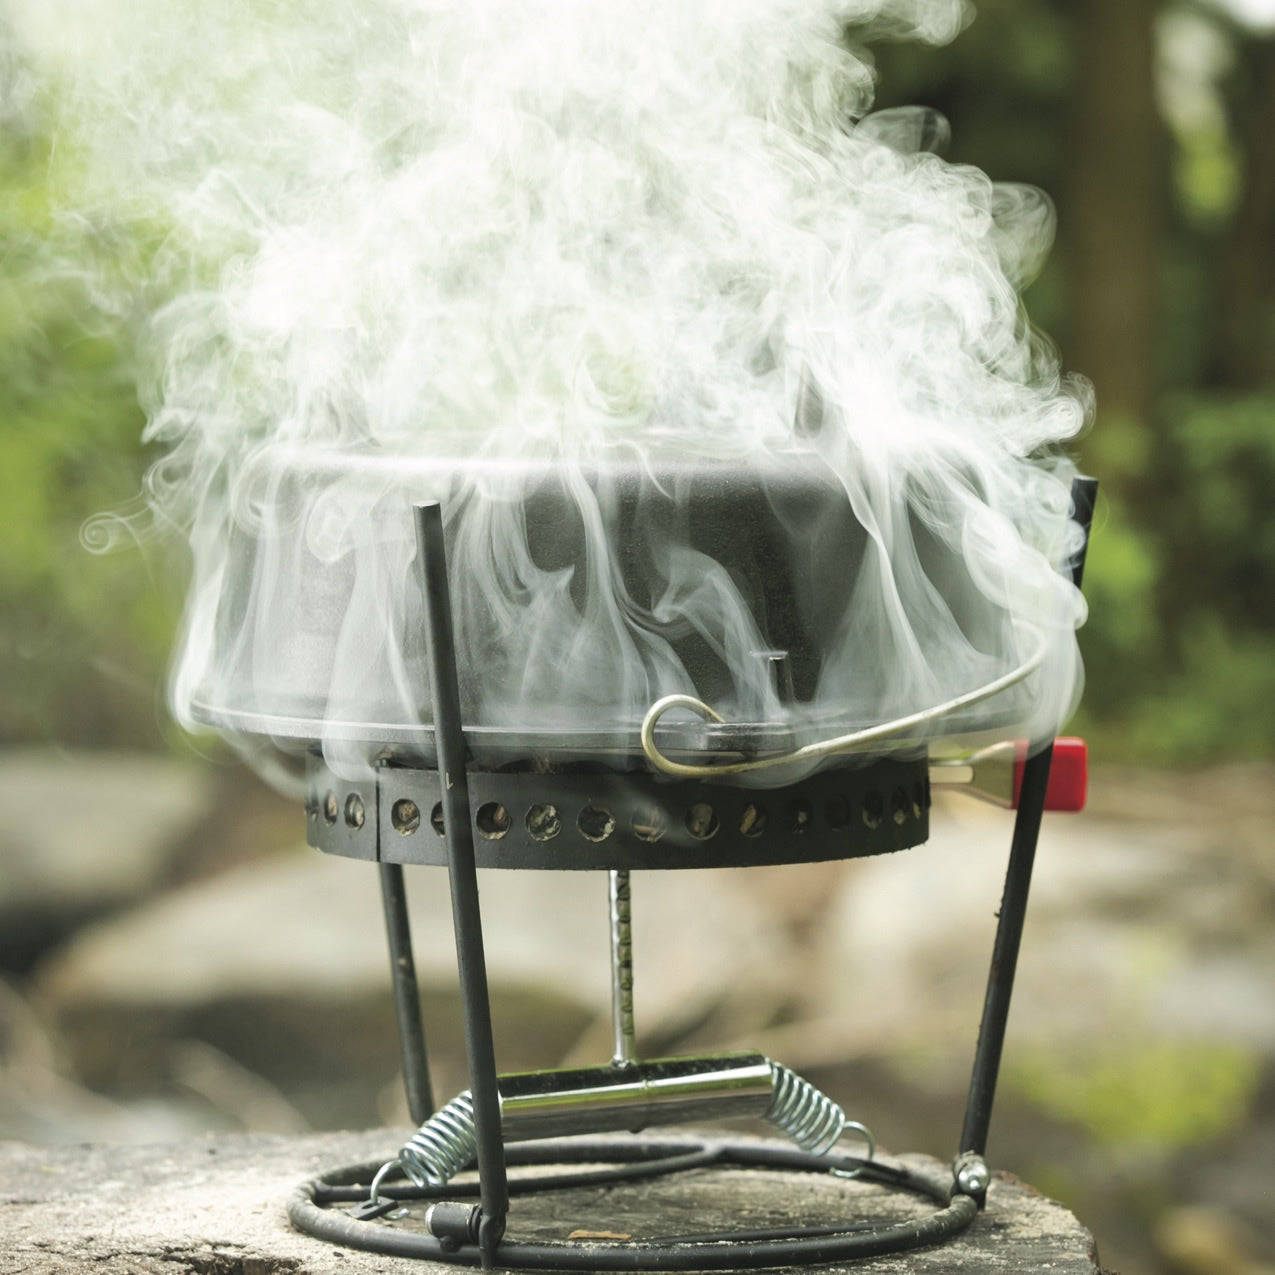 Dutch Oven Campfire Cooking Essentials